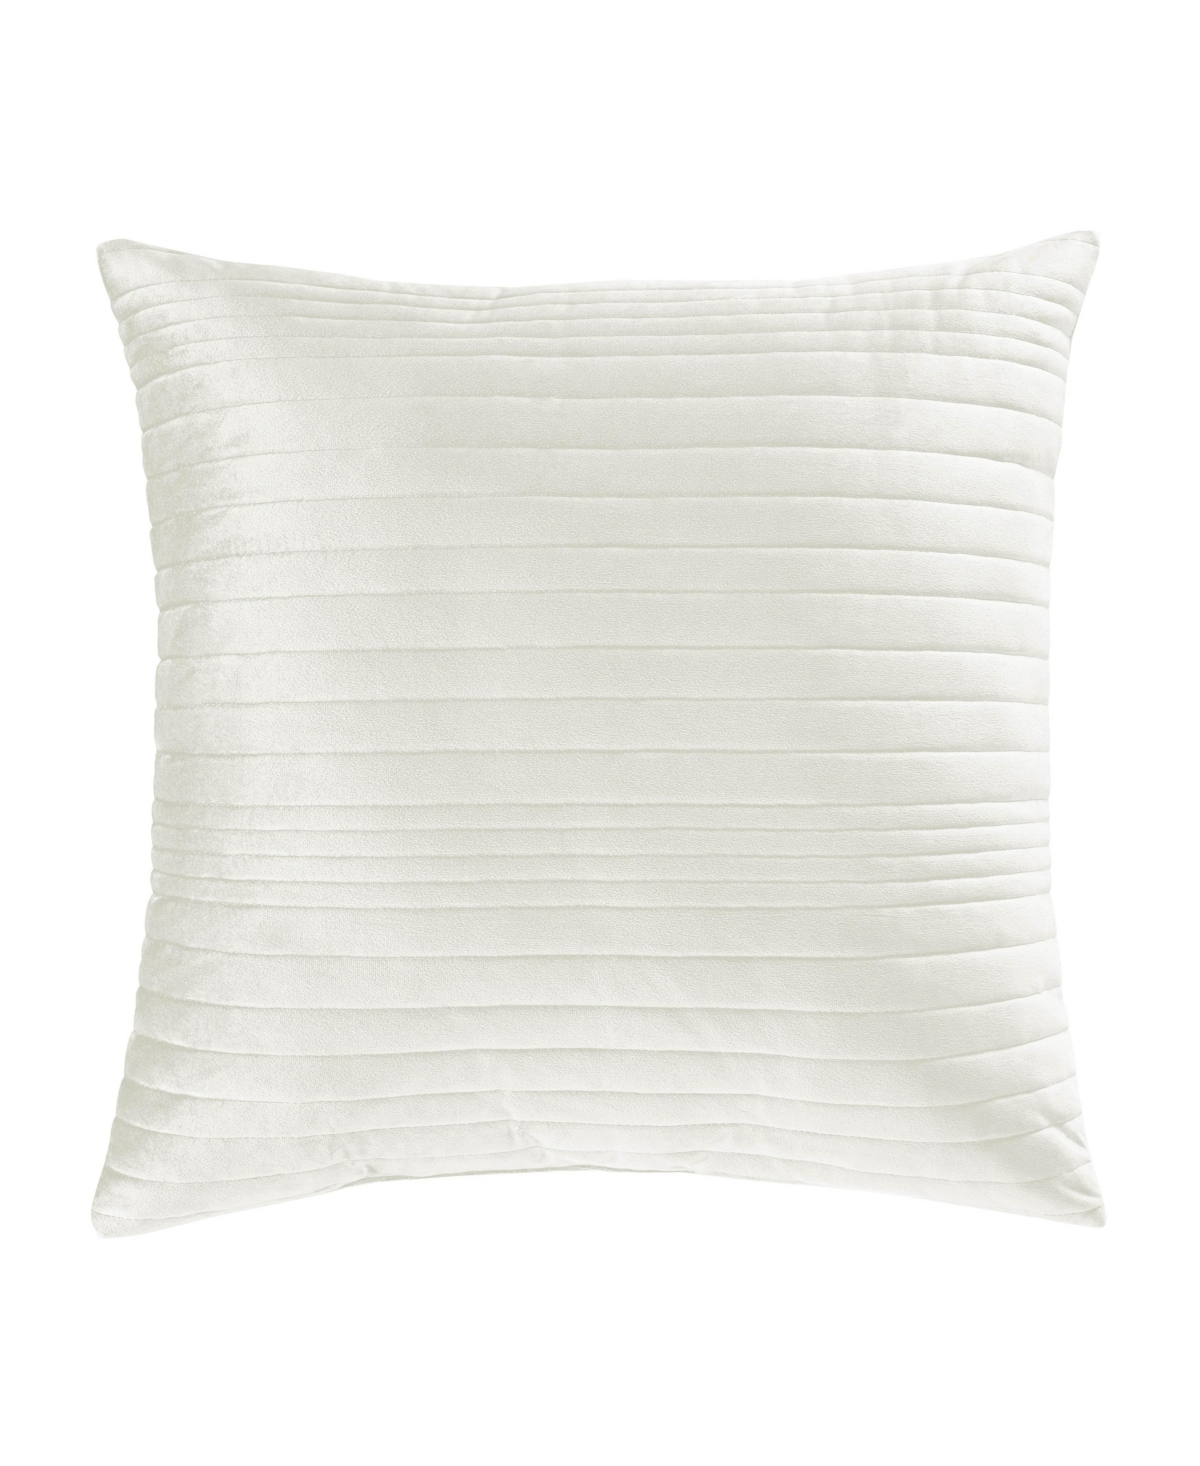 Oscar Oliver Mercer Decorative Pillow, 20" X 20" In White